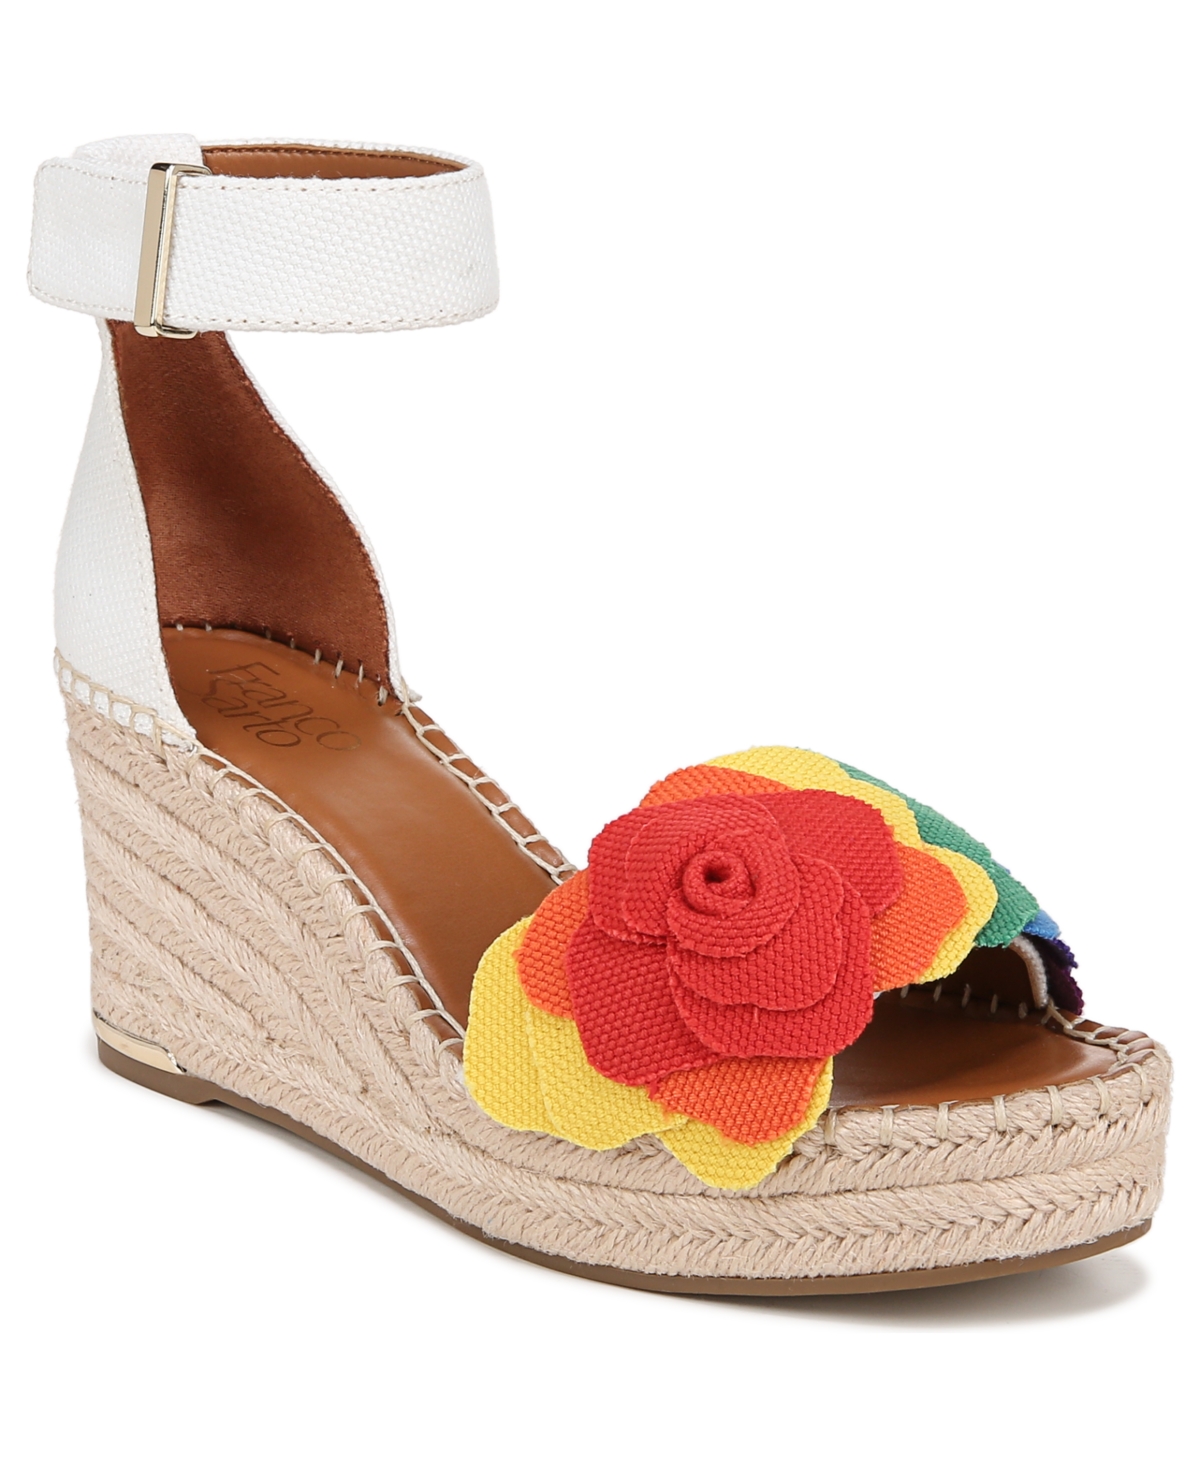 Clemens-Flower Espadrille Wedge Sandals - Rainbow Multi Fabric